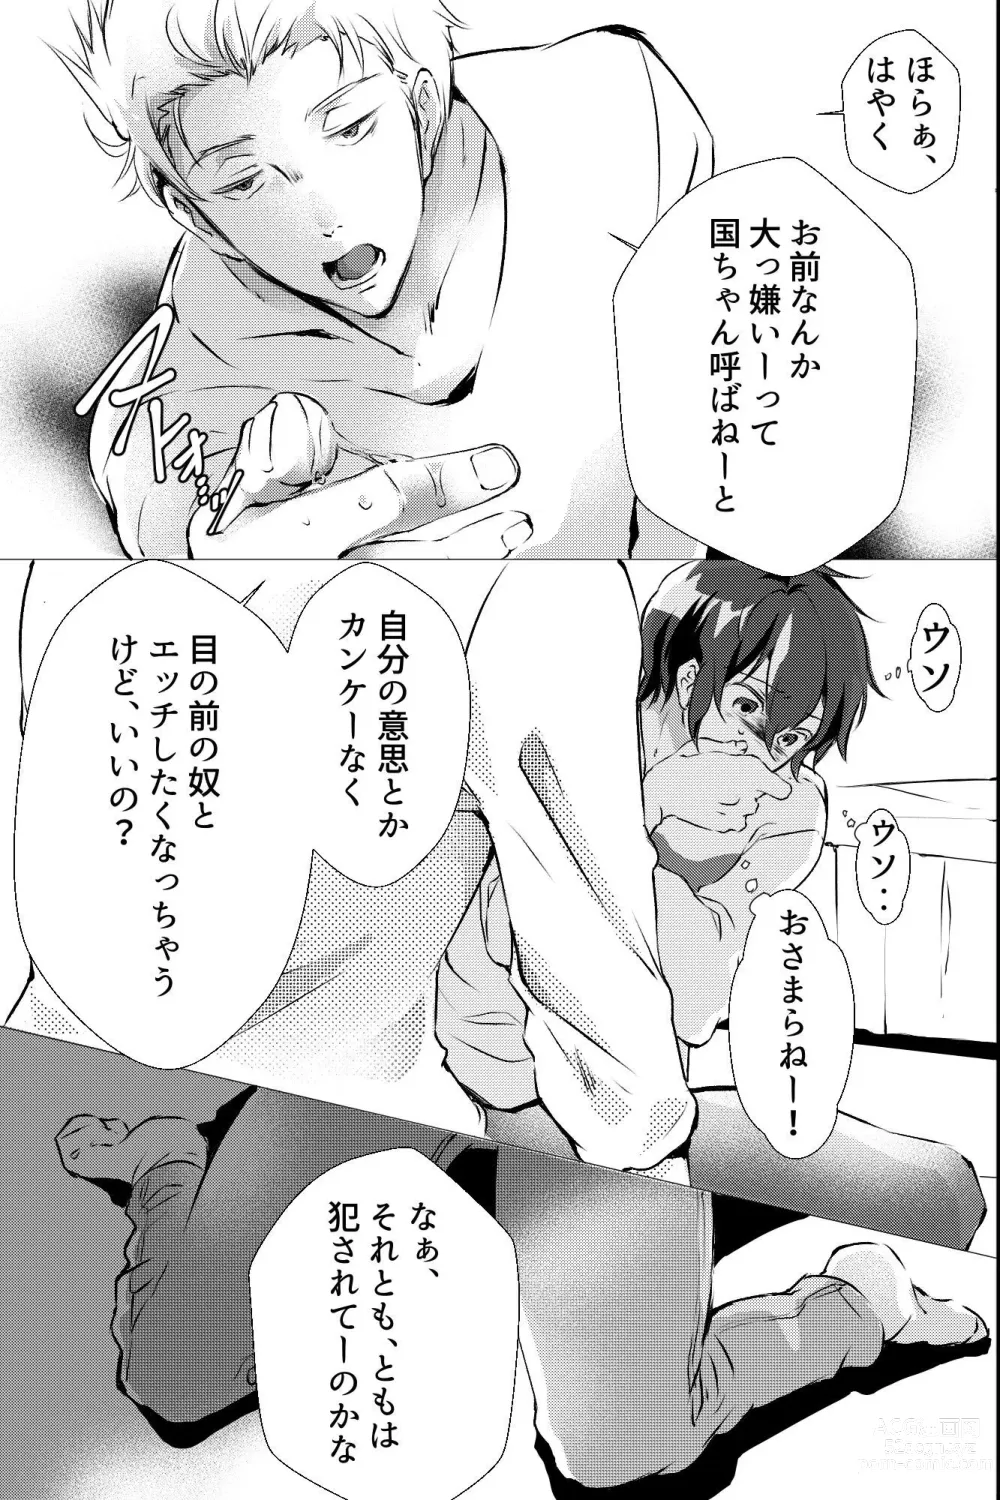 Page 20 of doujinshi 俺しか知らない親友のカオ。媚薬を親友に盛られたら